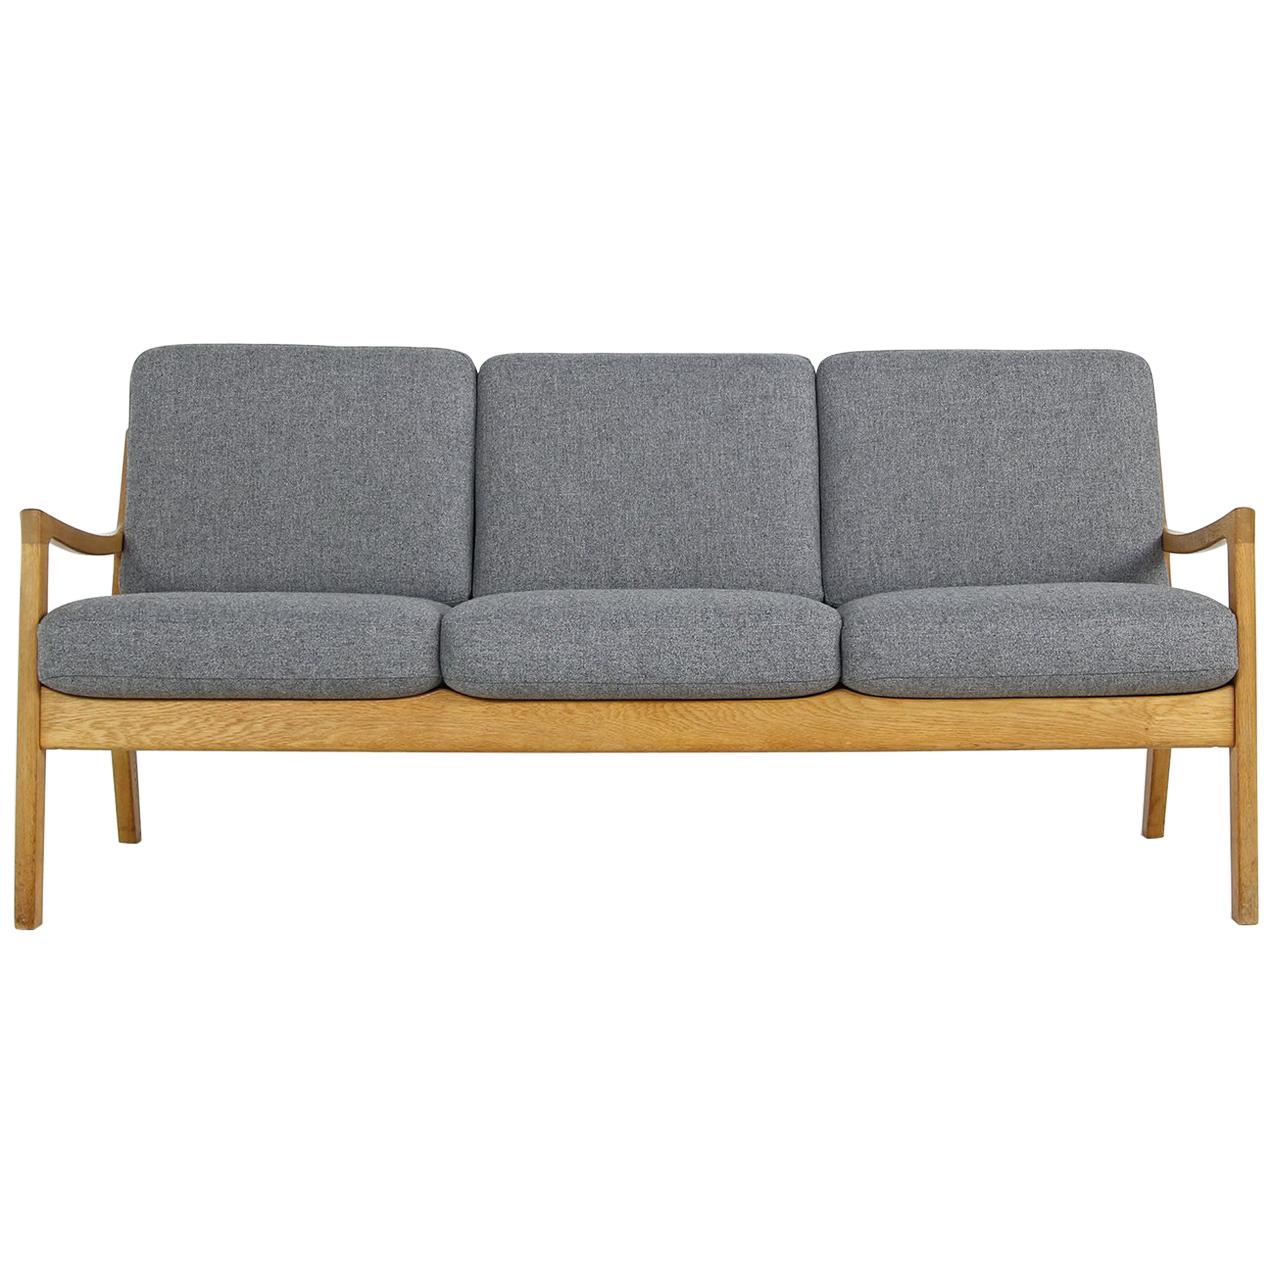 1960s Ole Wanscher Oak Sofa, New Upholstery in Grey, Danish Modern, Midcentury